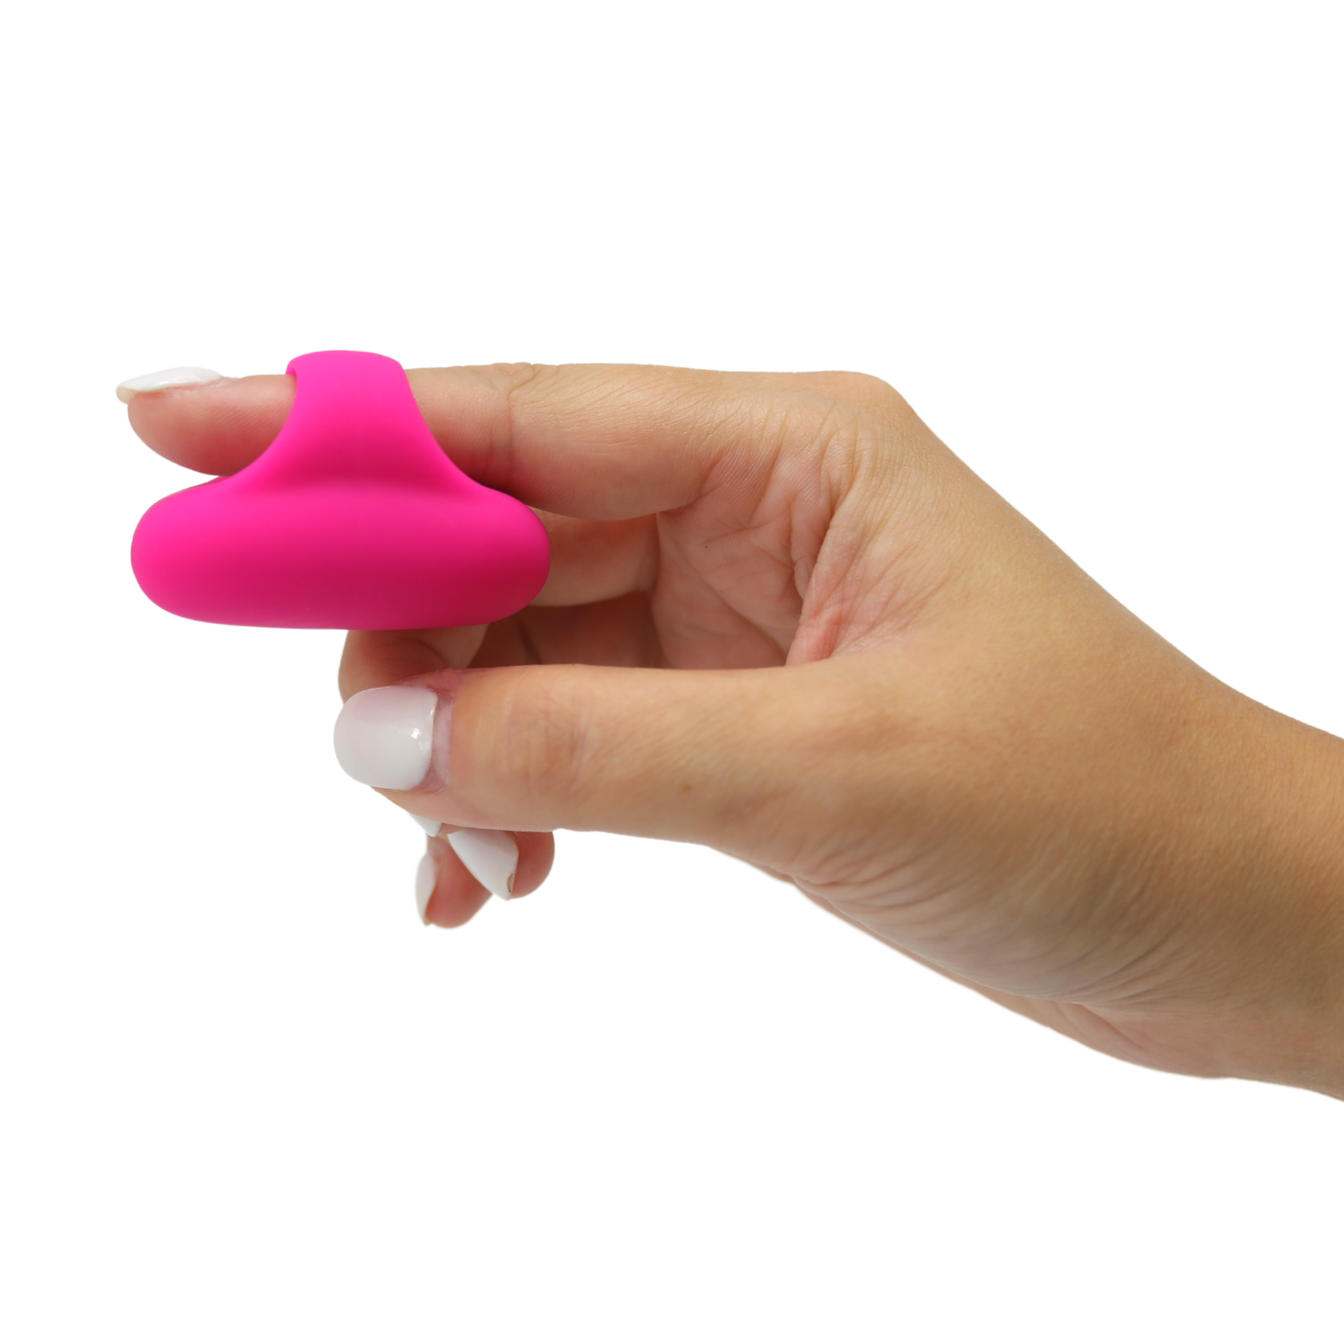 Image of a hand model wearing hot pink finger vibrator